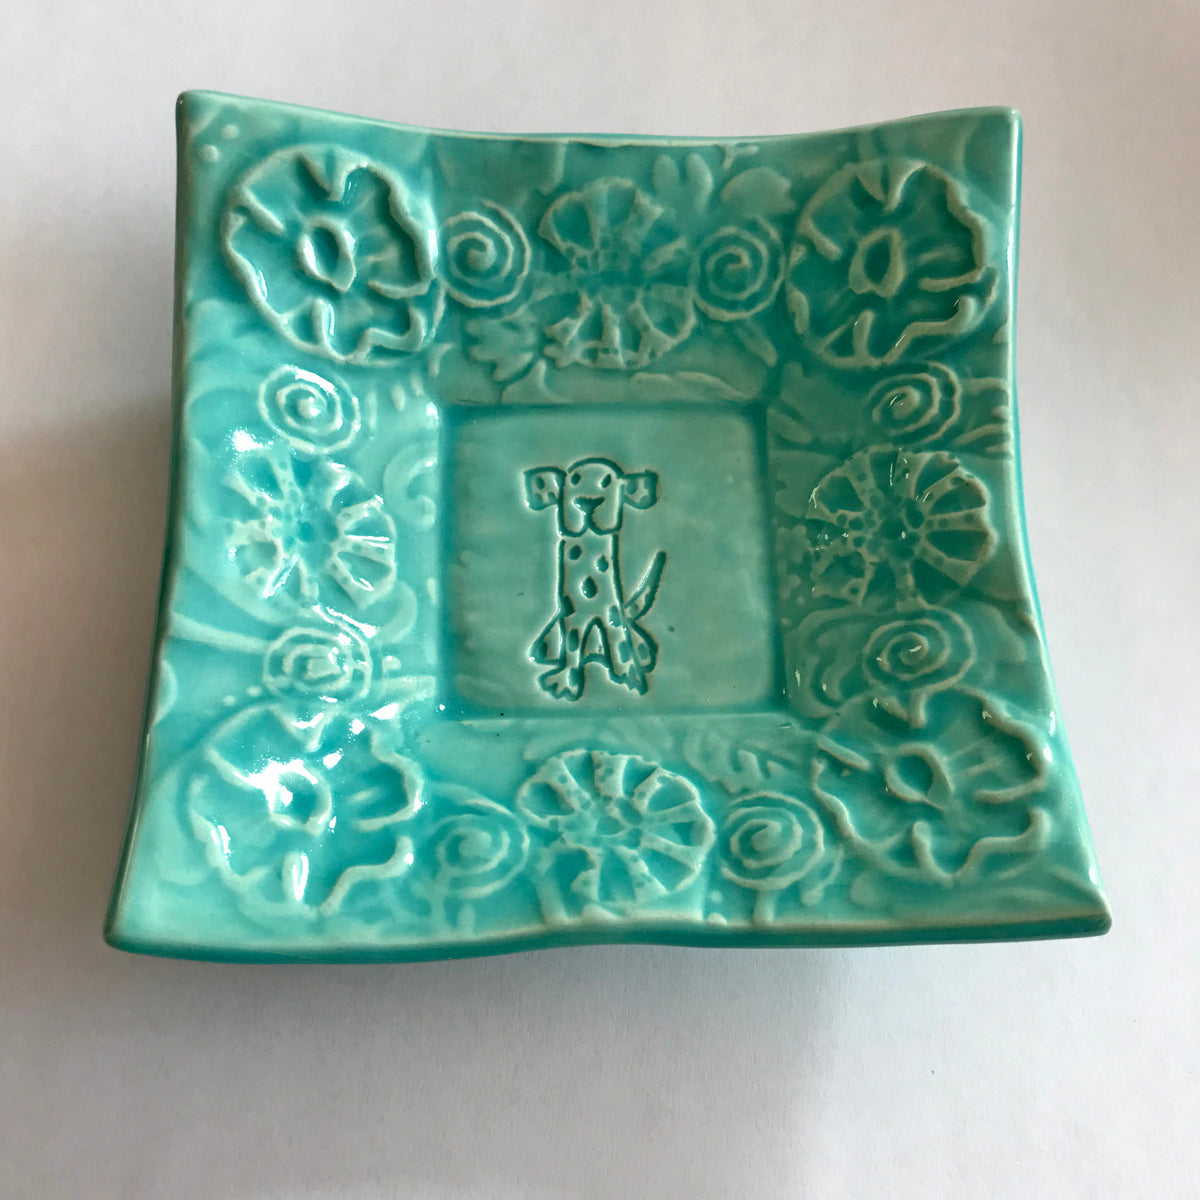 Turquoise glaze enhances dog design on small dish handmade by Lorraine Oerth.